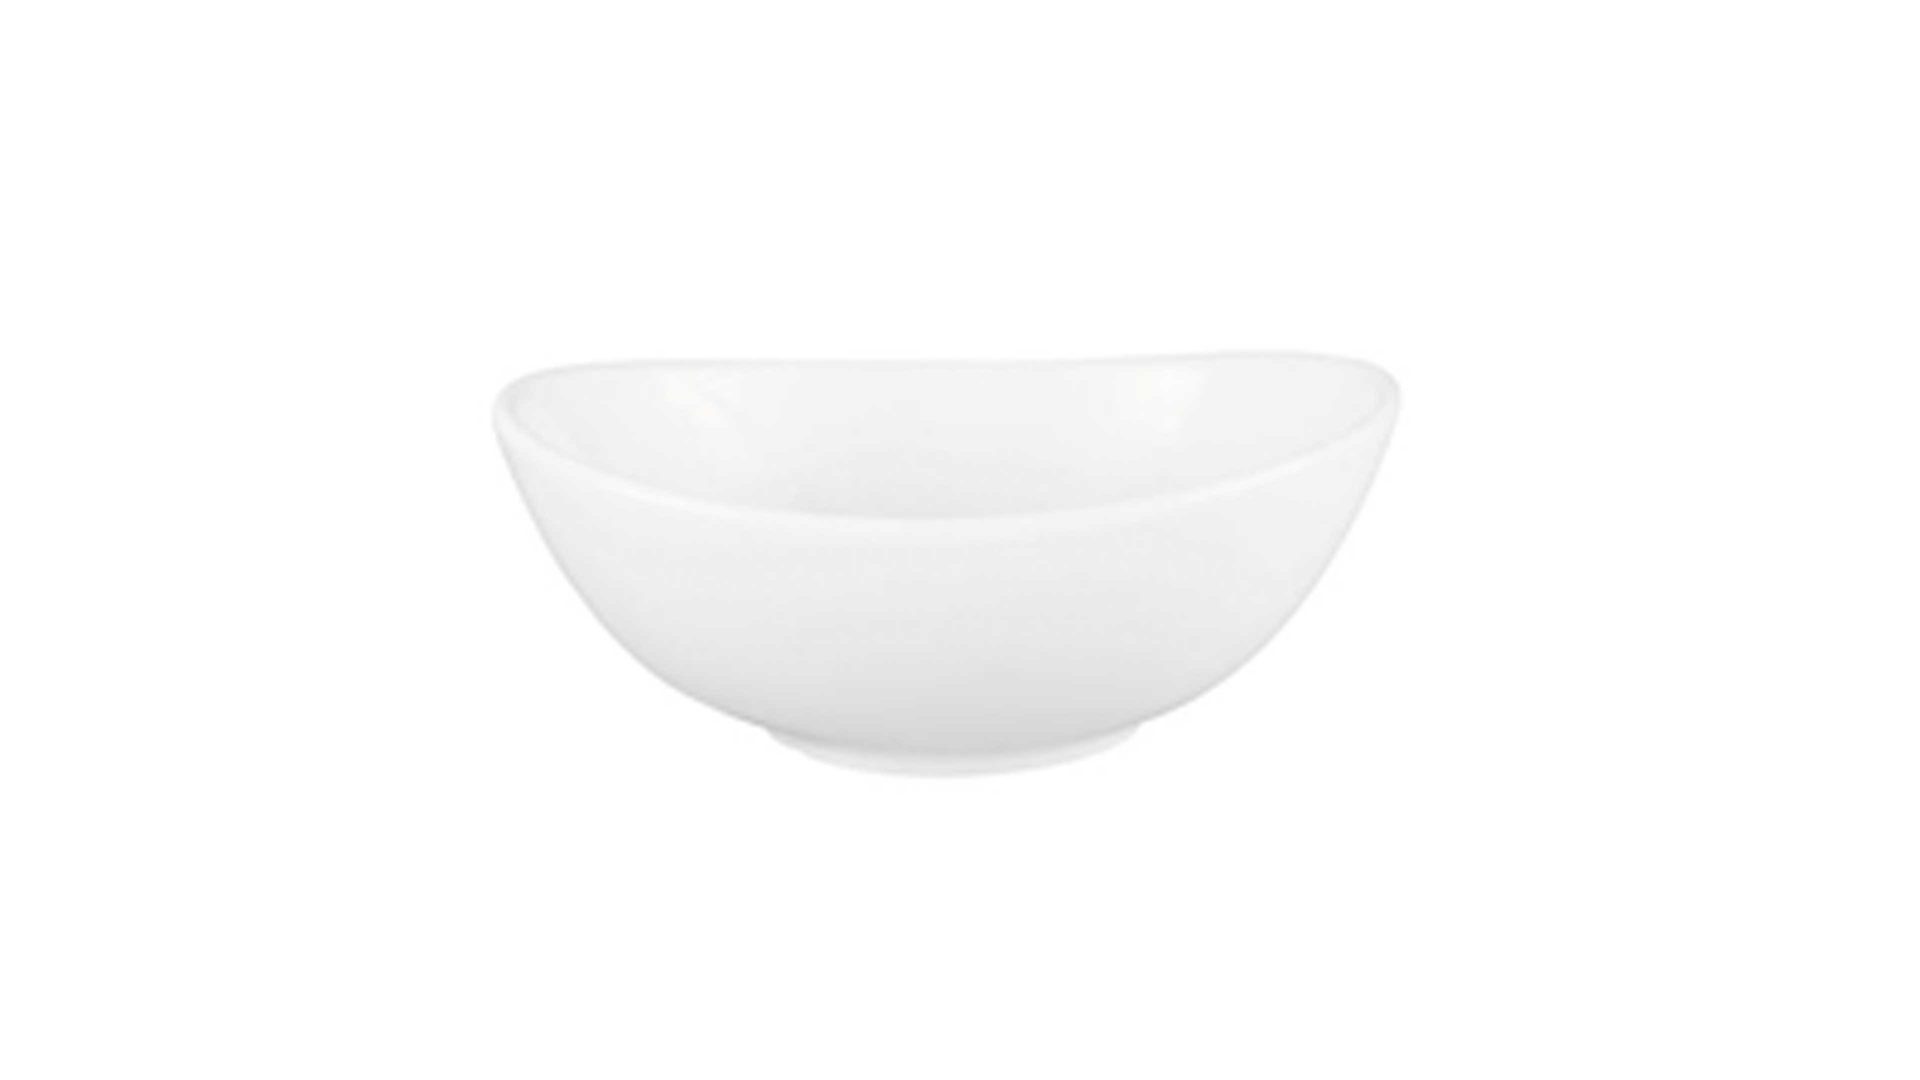 Schüssel Seltmann aus Porzellan in Weiß Seltmann Porzellanserie Modern Life 6 – Bowl weißes Porzellan – Durchmesser ca. 12 cm